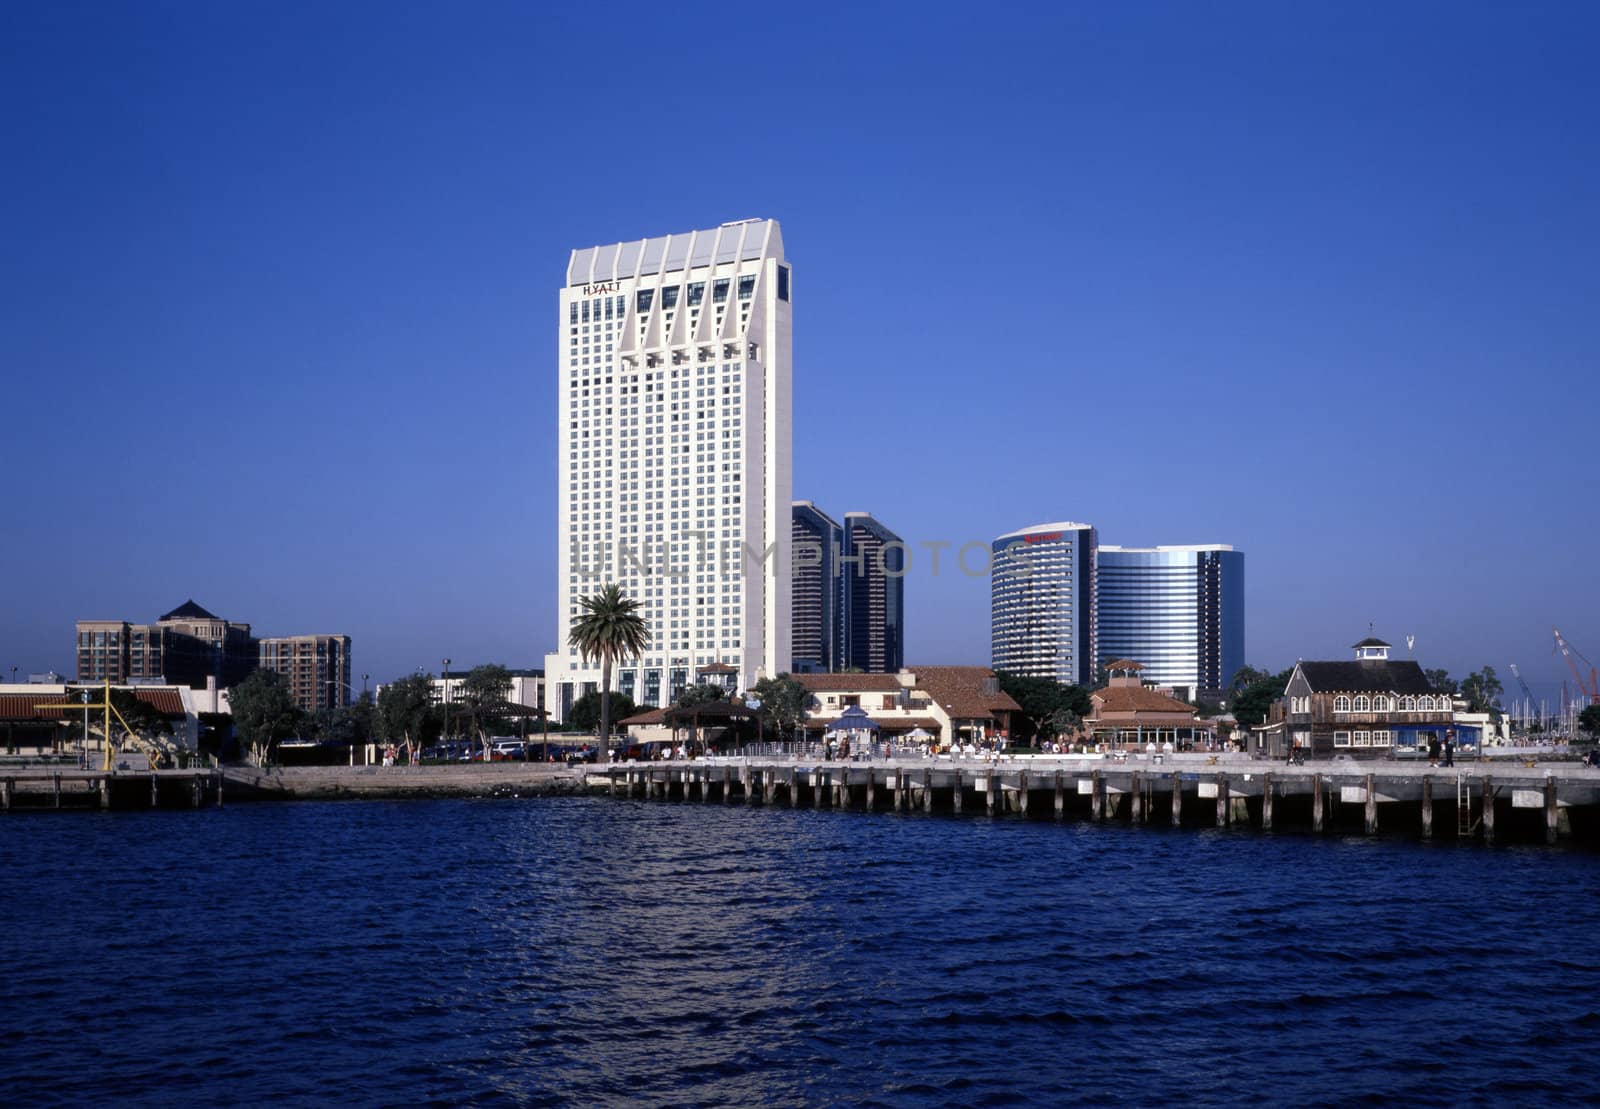 Seaport Village in San Diego with hotel Hyatt and Marriott